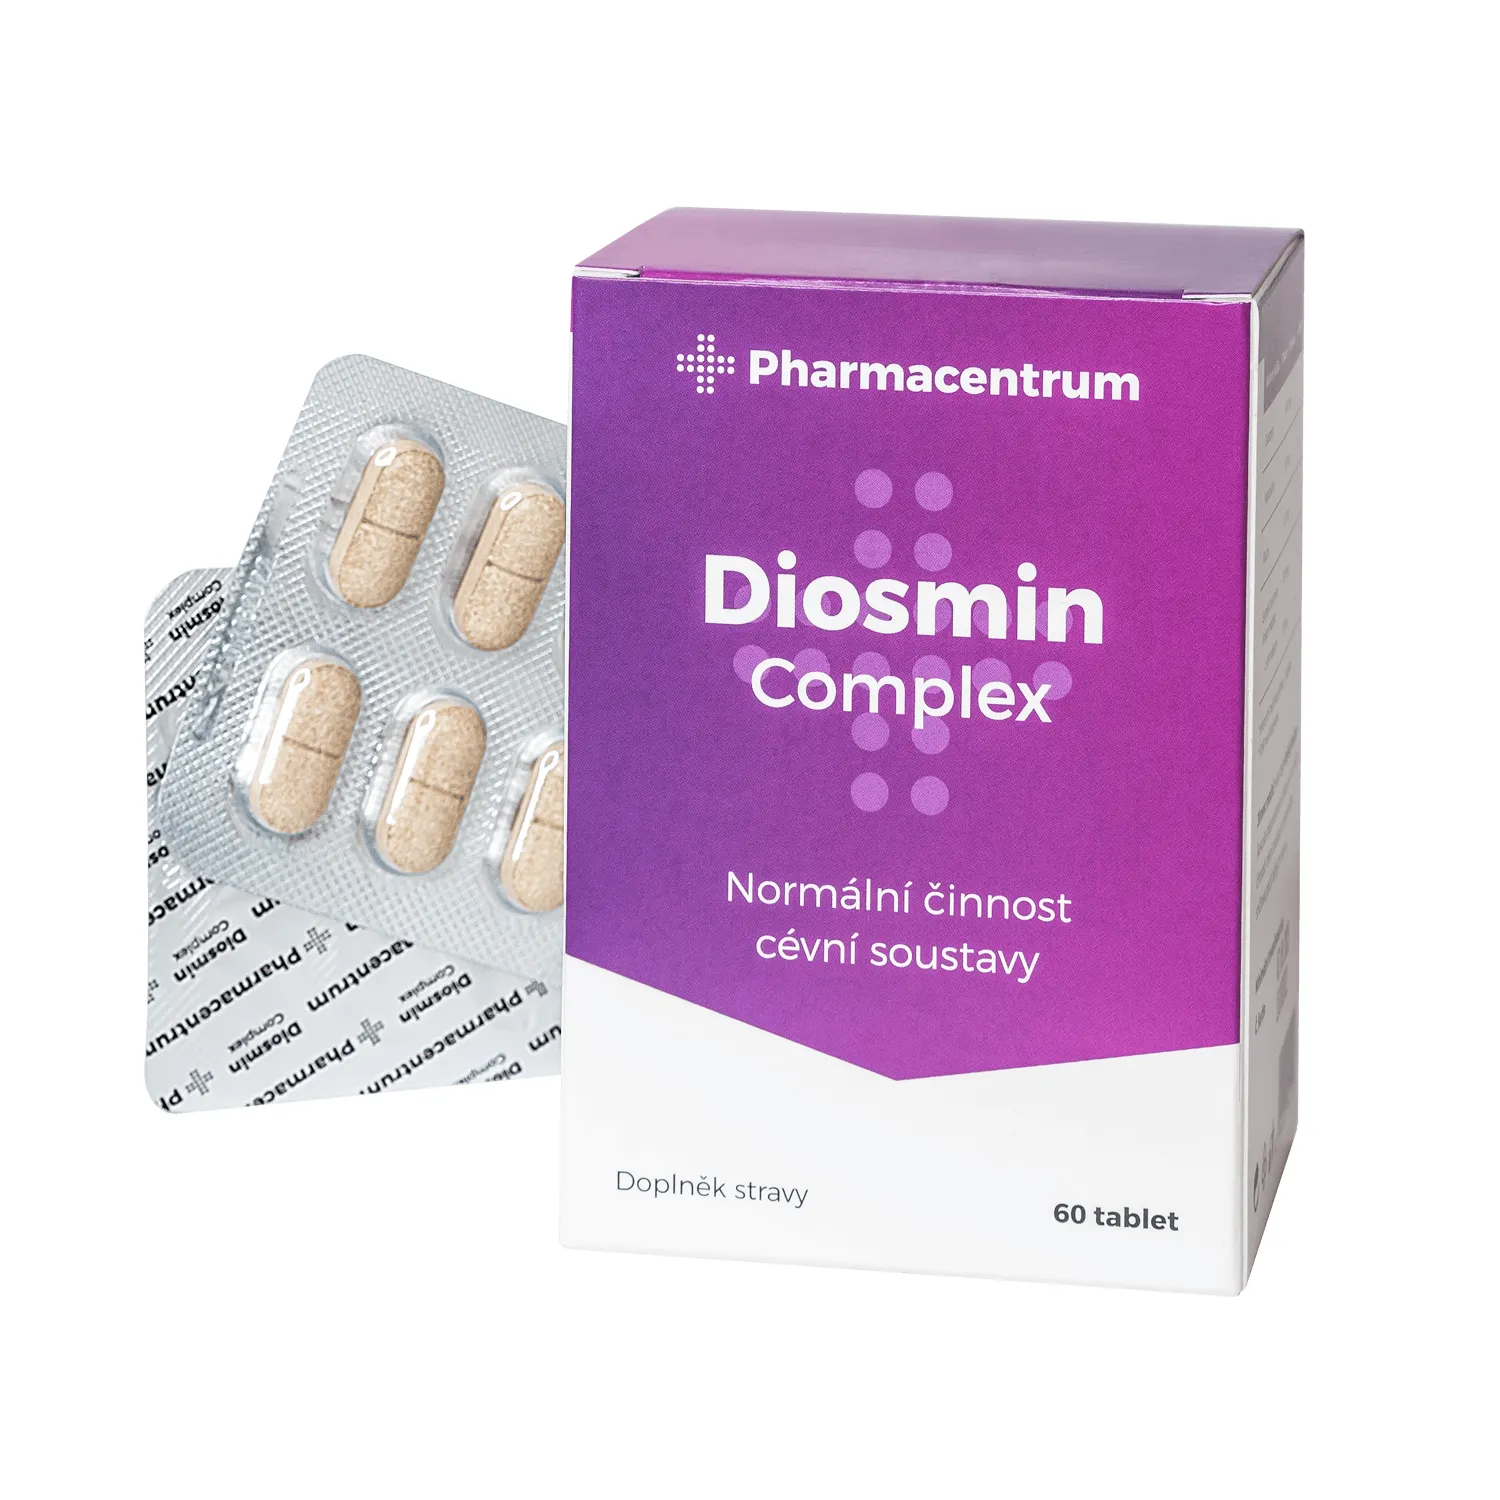 Pharmacentrum Diosmin Complex 60 tablet